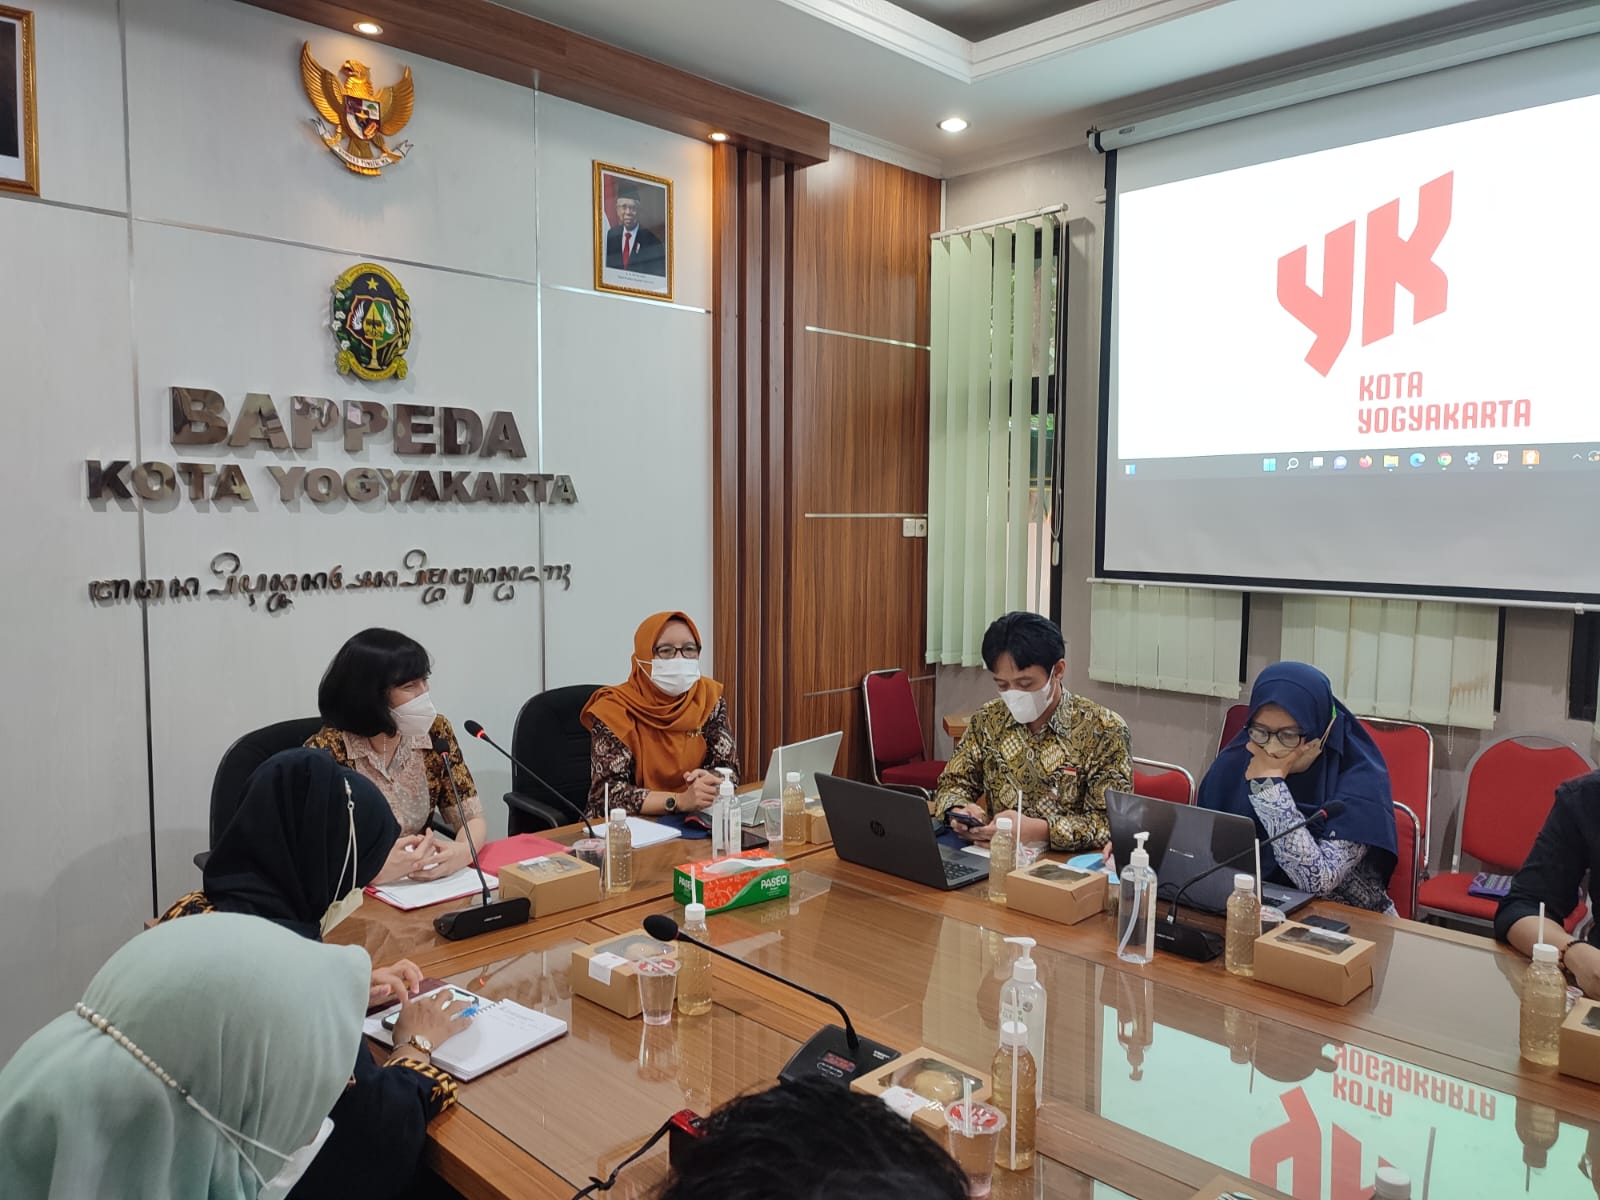 Kunjungan Studi Banding Bimtek JFP Tingkat Pertama Batch 2 dari Pemprov DKI Jakarta dengan Tema Kerjasama Pemerintah dan Masyarakat dalam Penataan Kawasan dan Pemberdayaan Masyarakat Yogyakarta